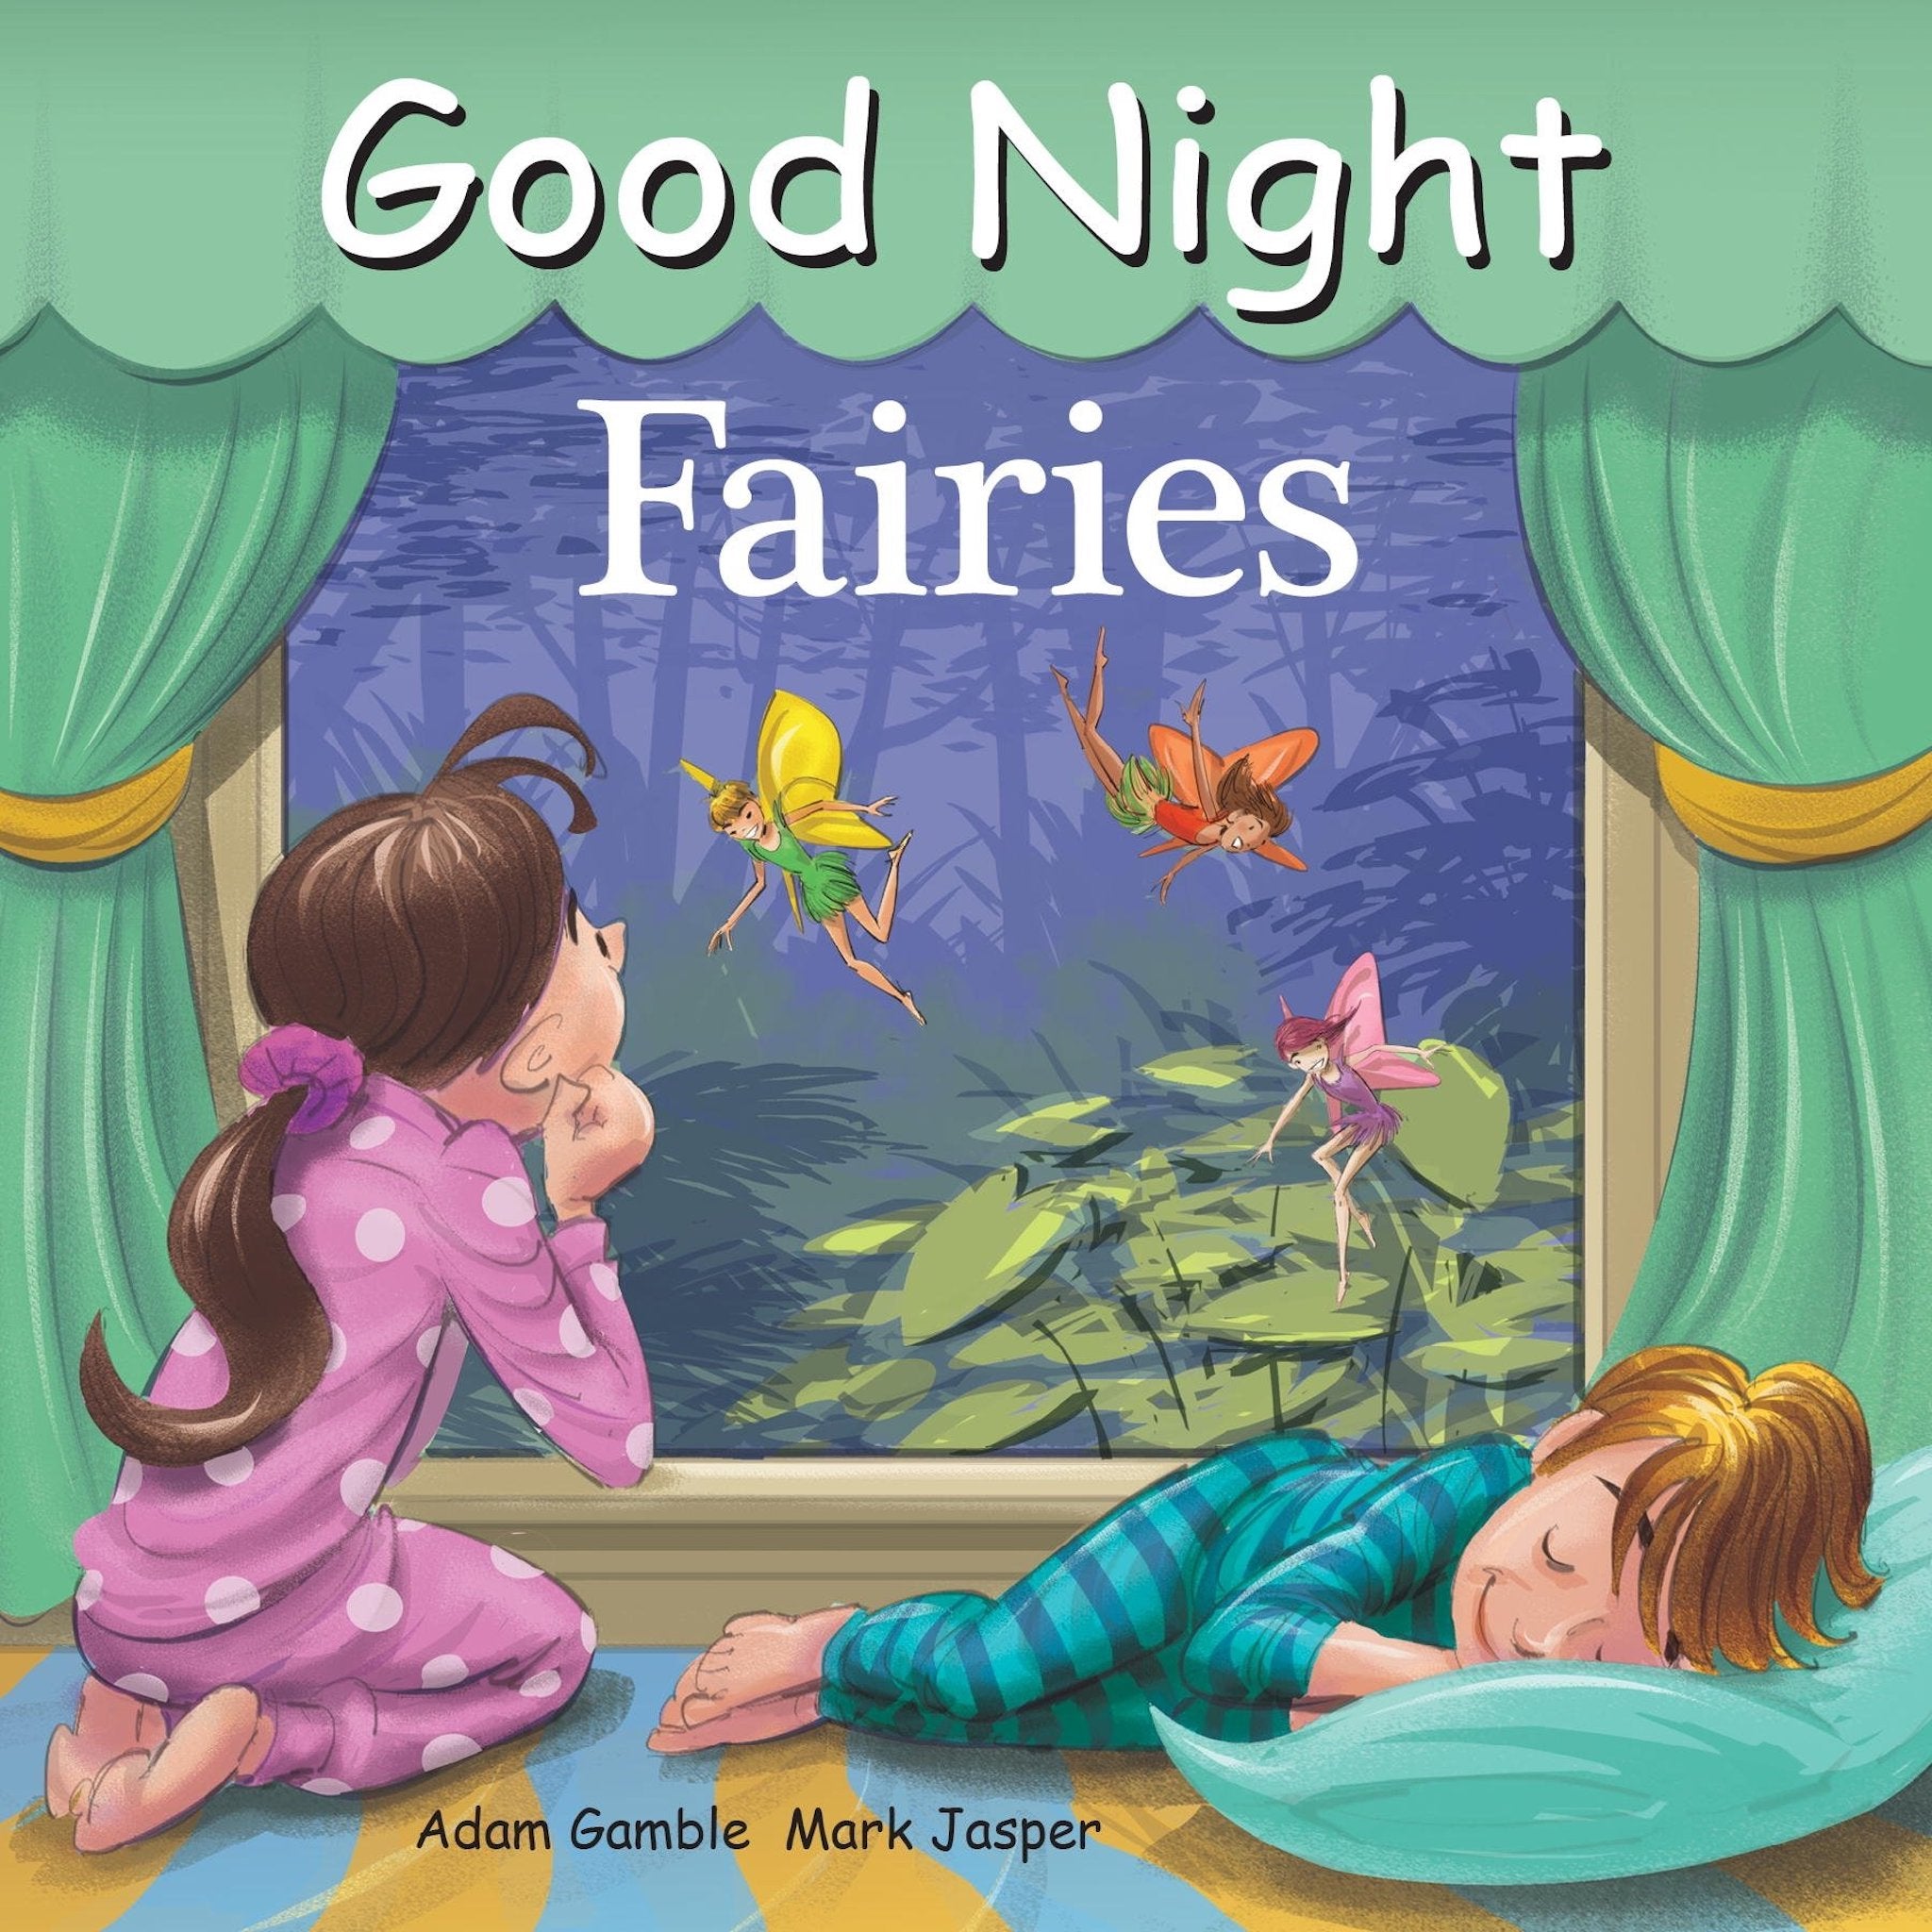 Goodnight Fairies written by Adam Gambler and illustrated by Mark Jasper